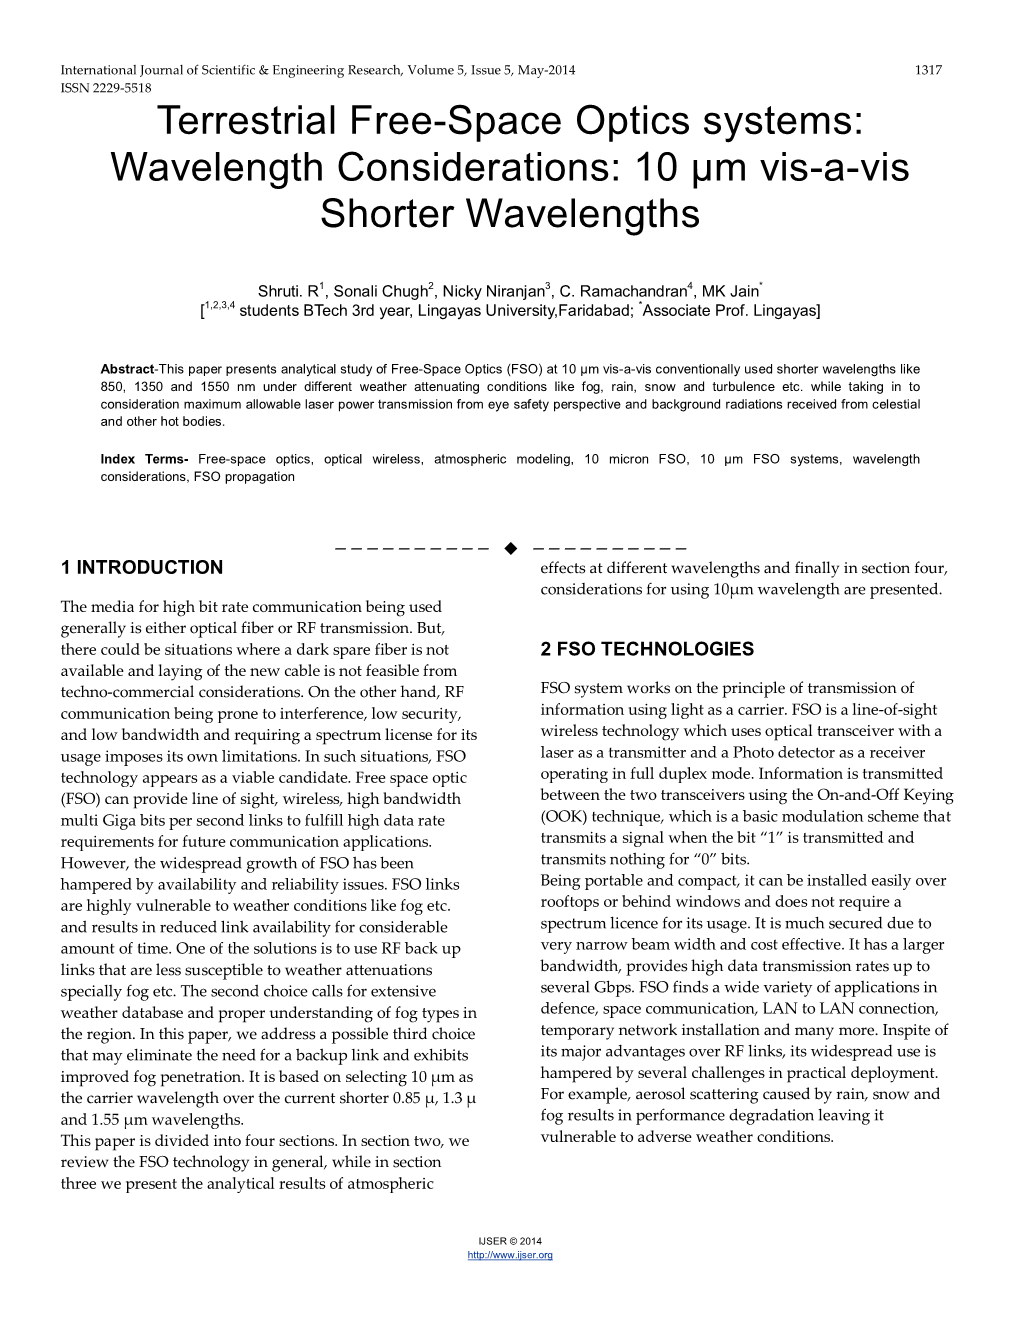 Terrestrial Free-Space Optics Systems: Wavelength Considerations: 10 Μm Vis-A-Vis Shorter Wavelengths